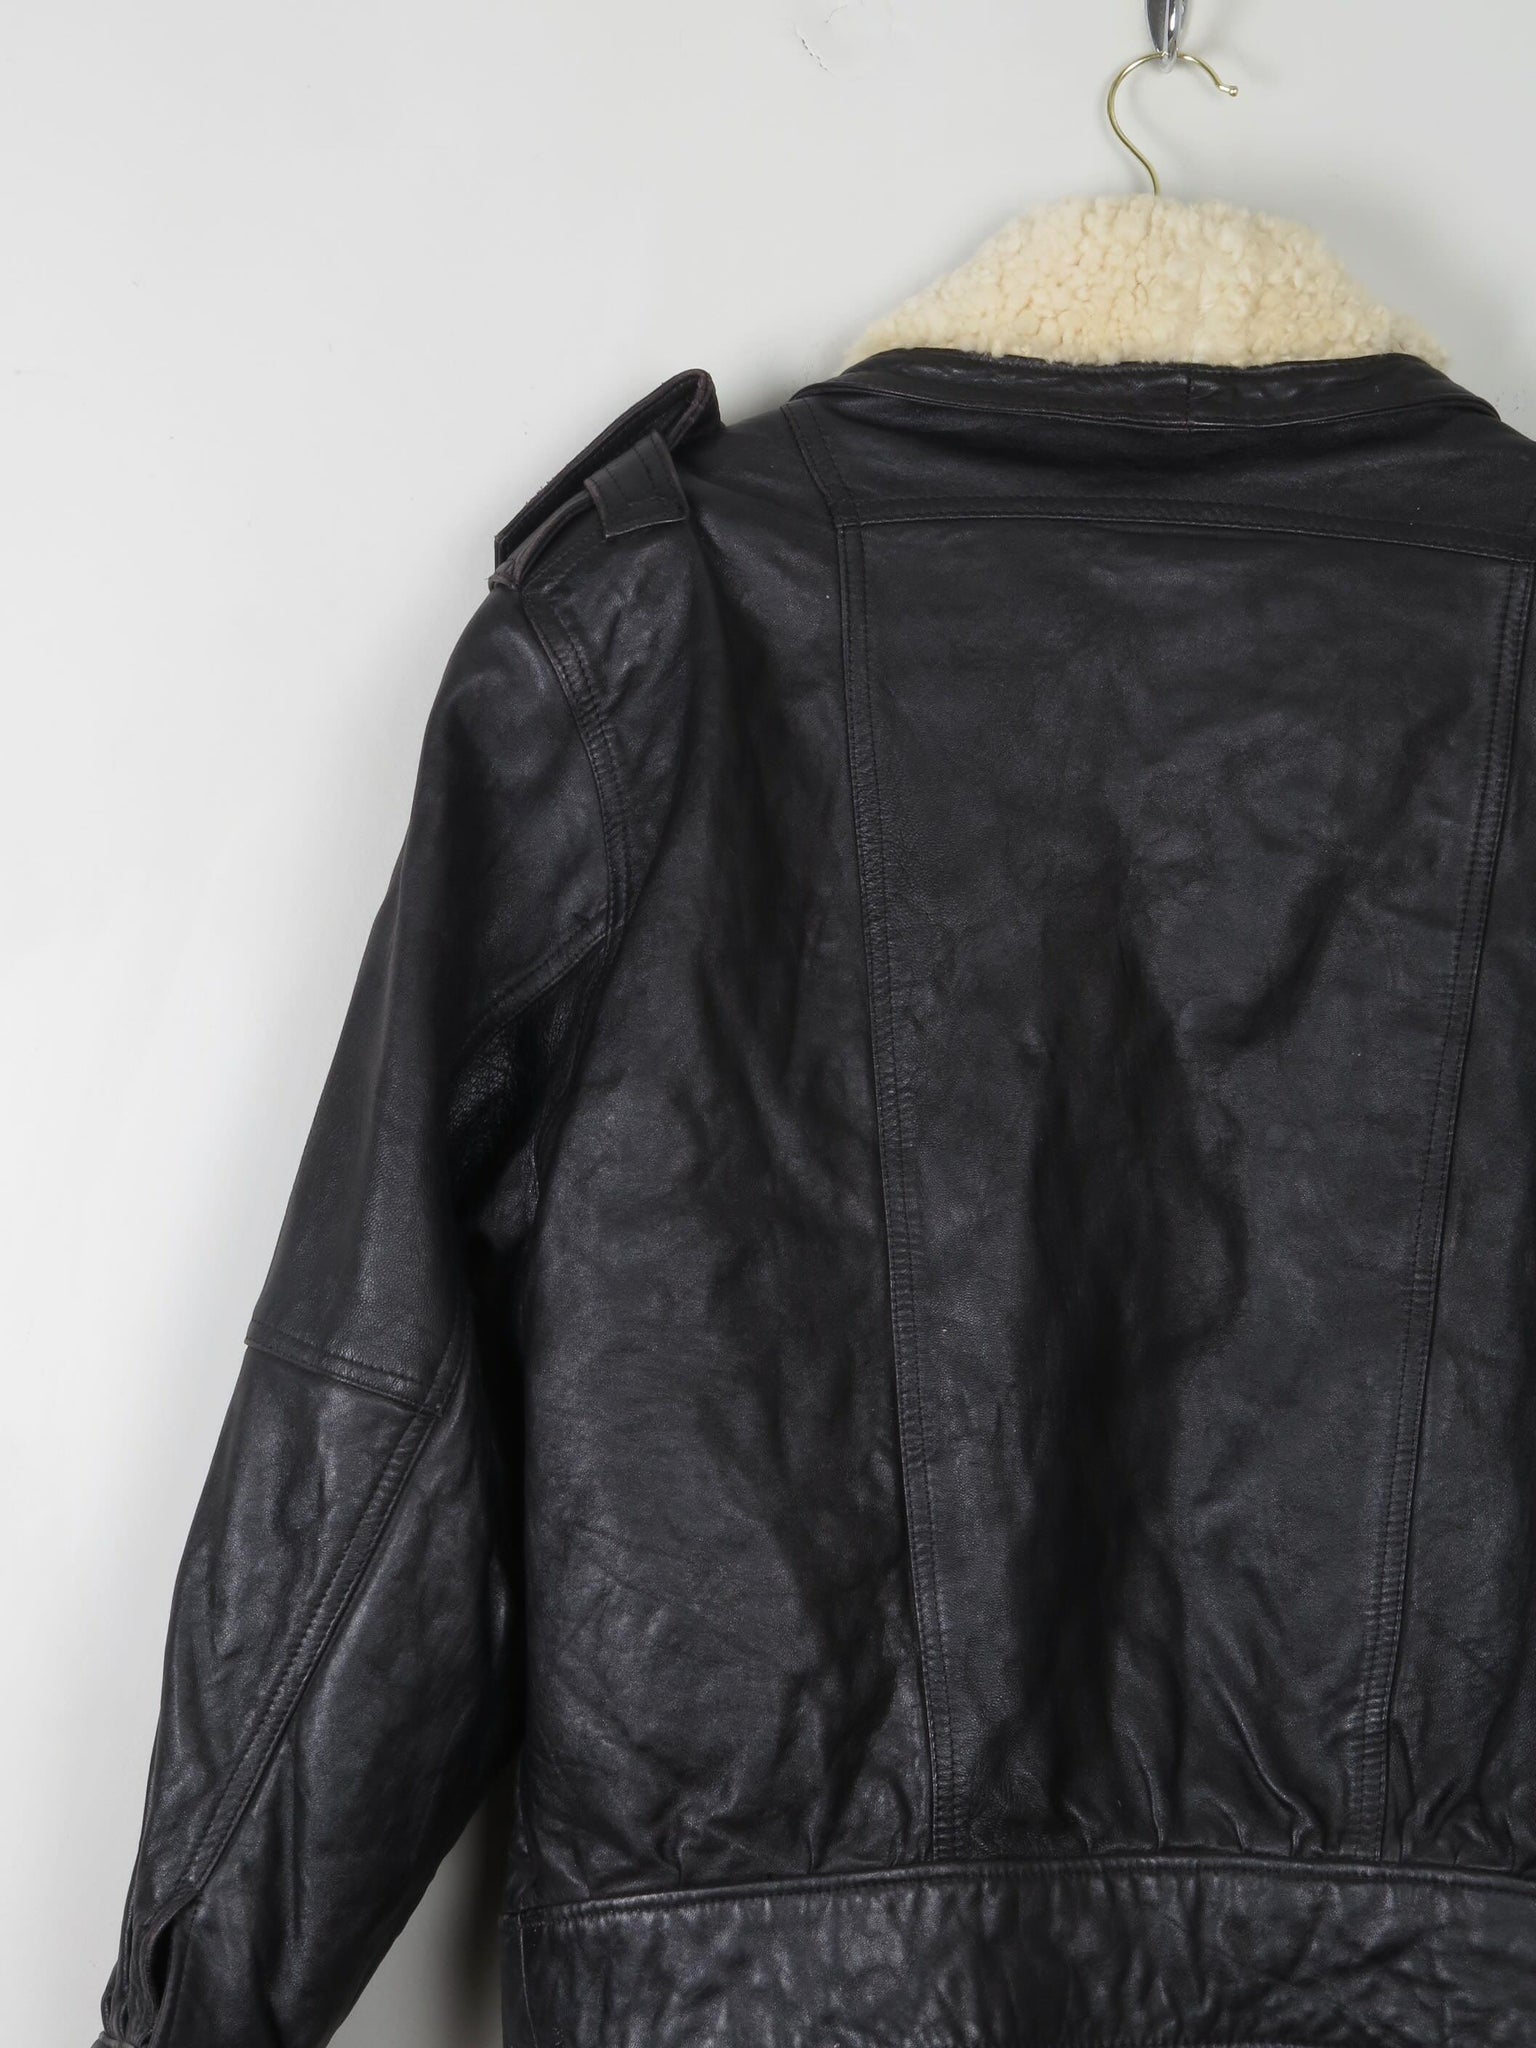 Women's Vintage Leather & Sheepskin Bomber Jacket S - The Harlequin